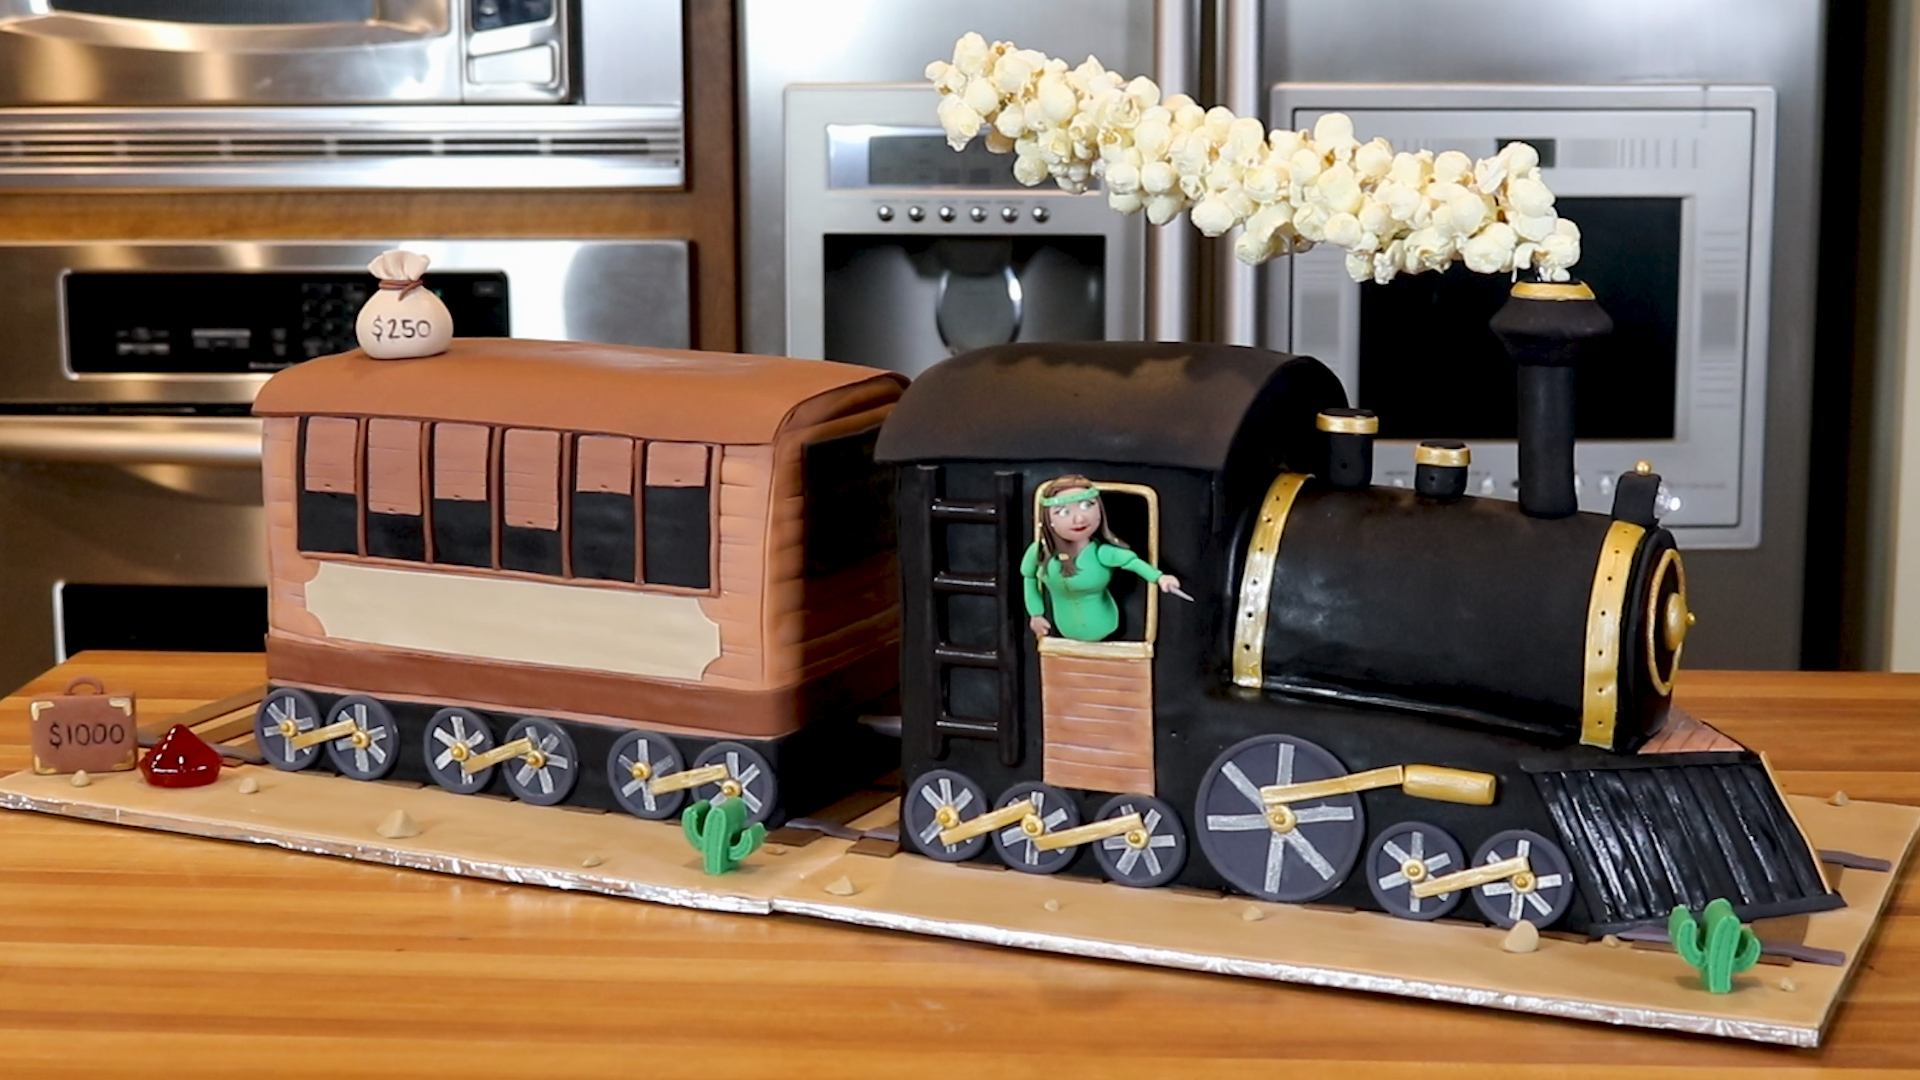 CAKESPIRATION: 28 tasty train cakes coming through